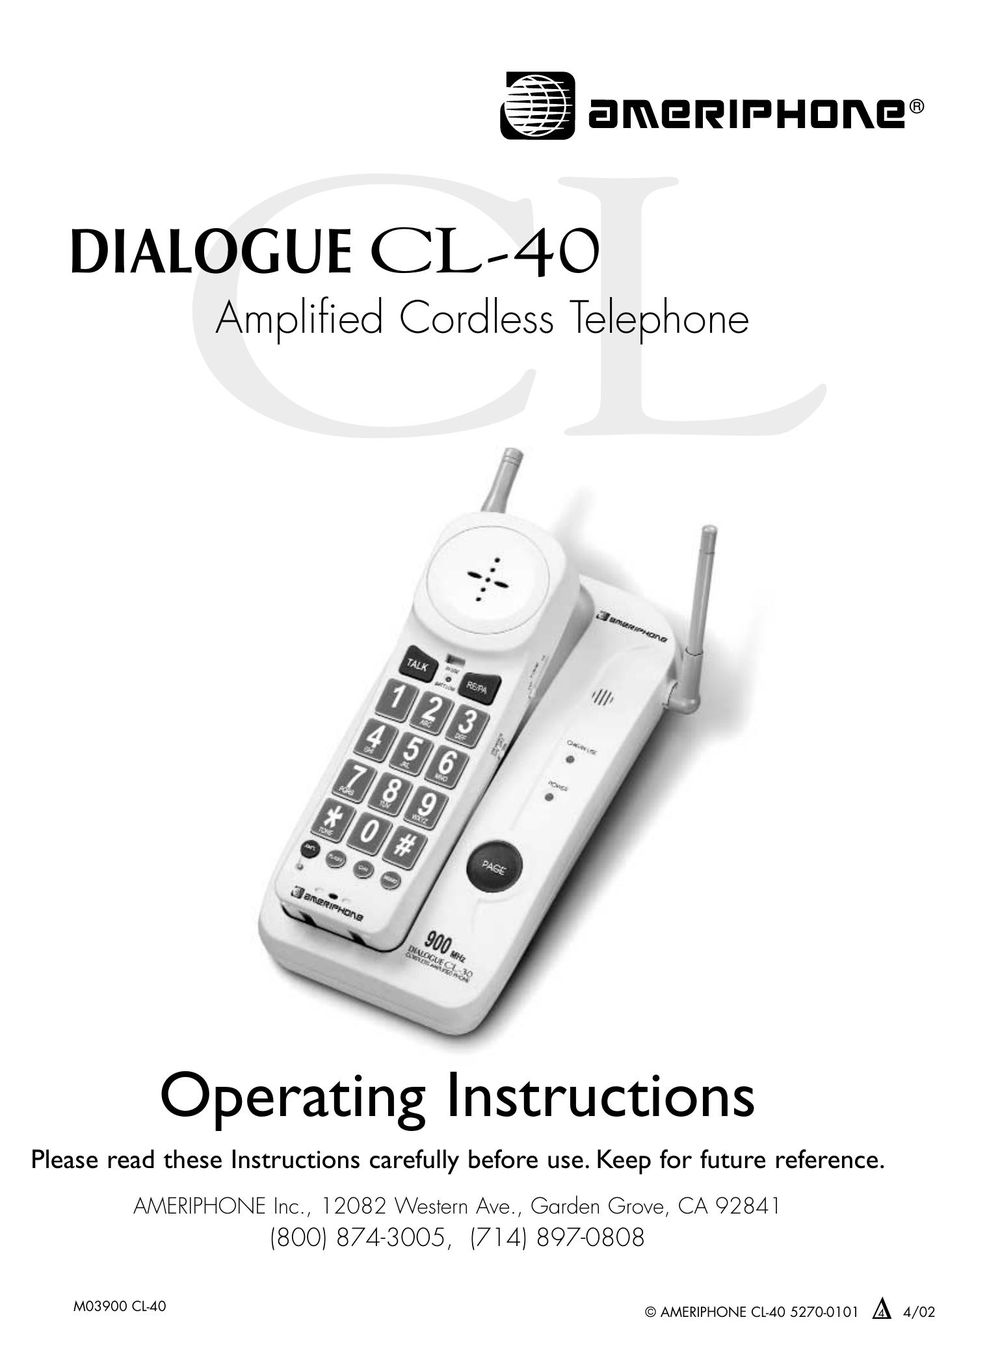 Ameriphone CL-40 Cordless Telephone User Manual